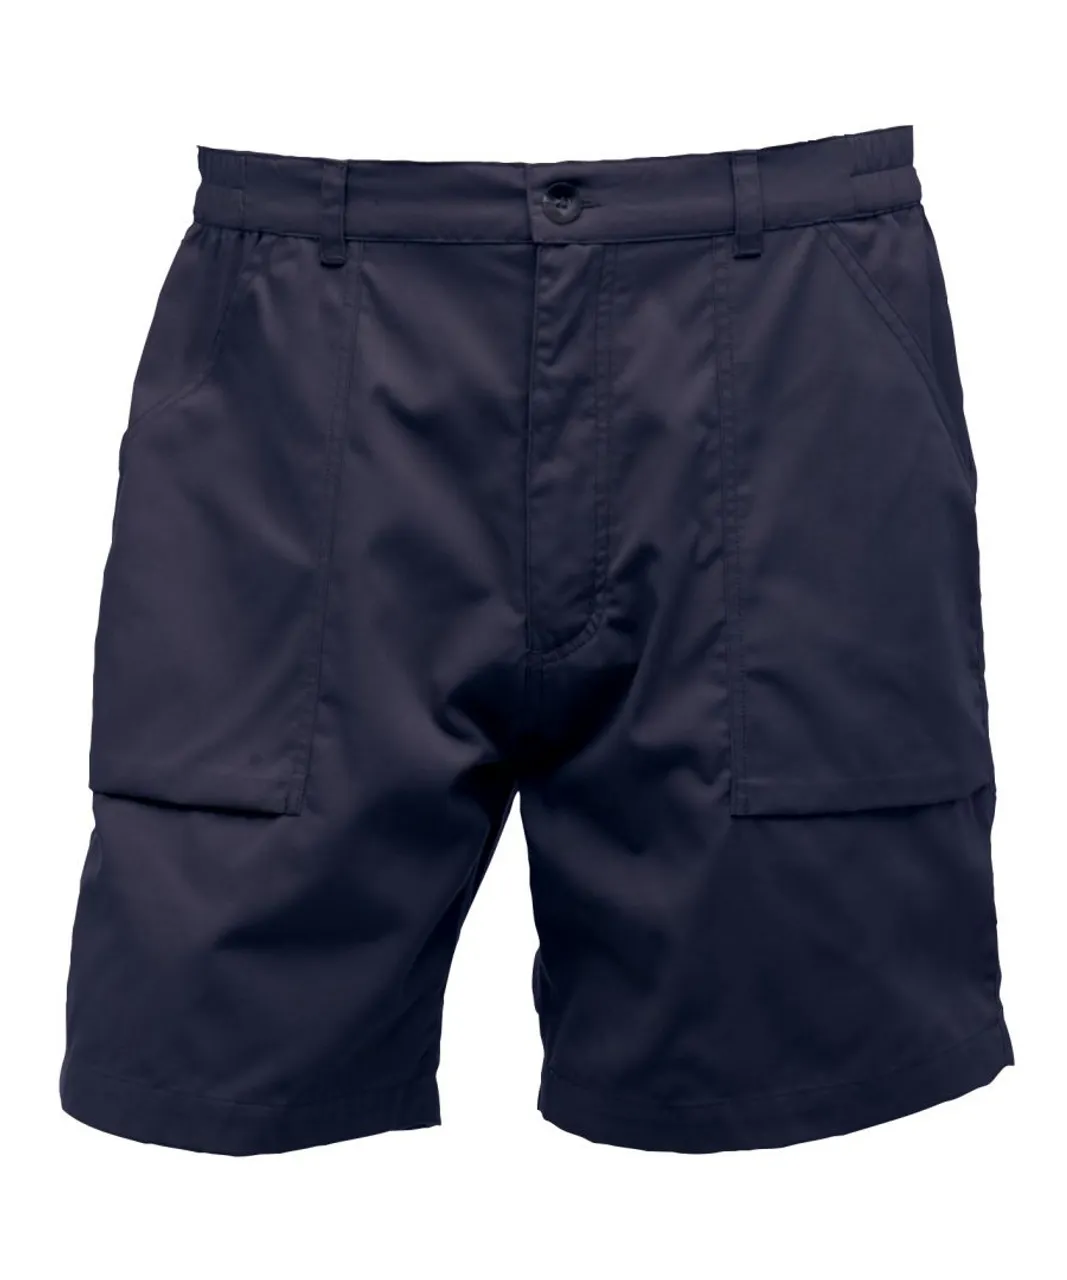 Regatta Mens New Action Sports Shorts (Navy)